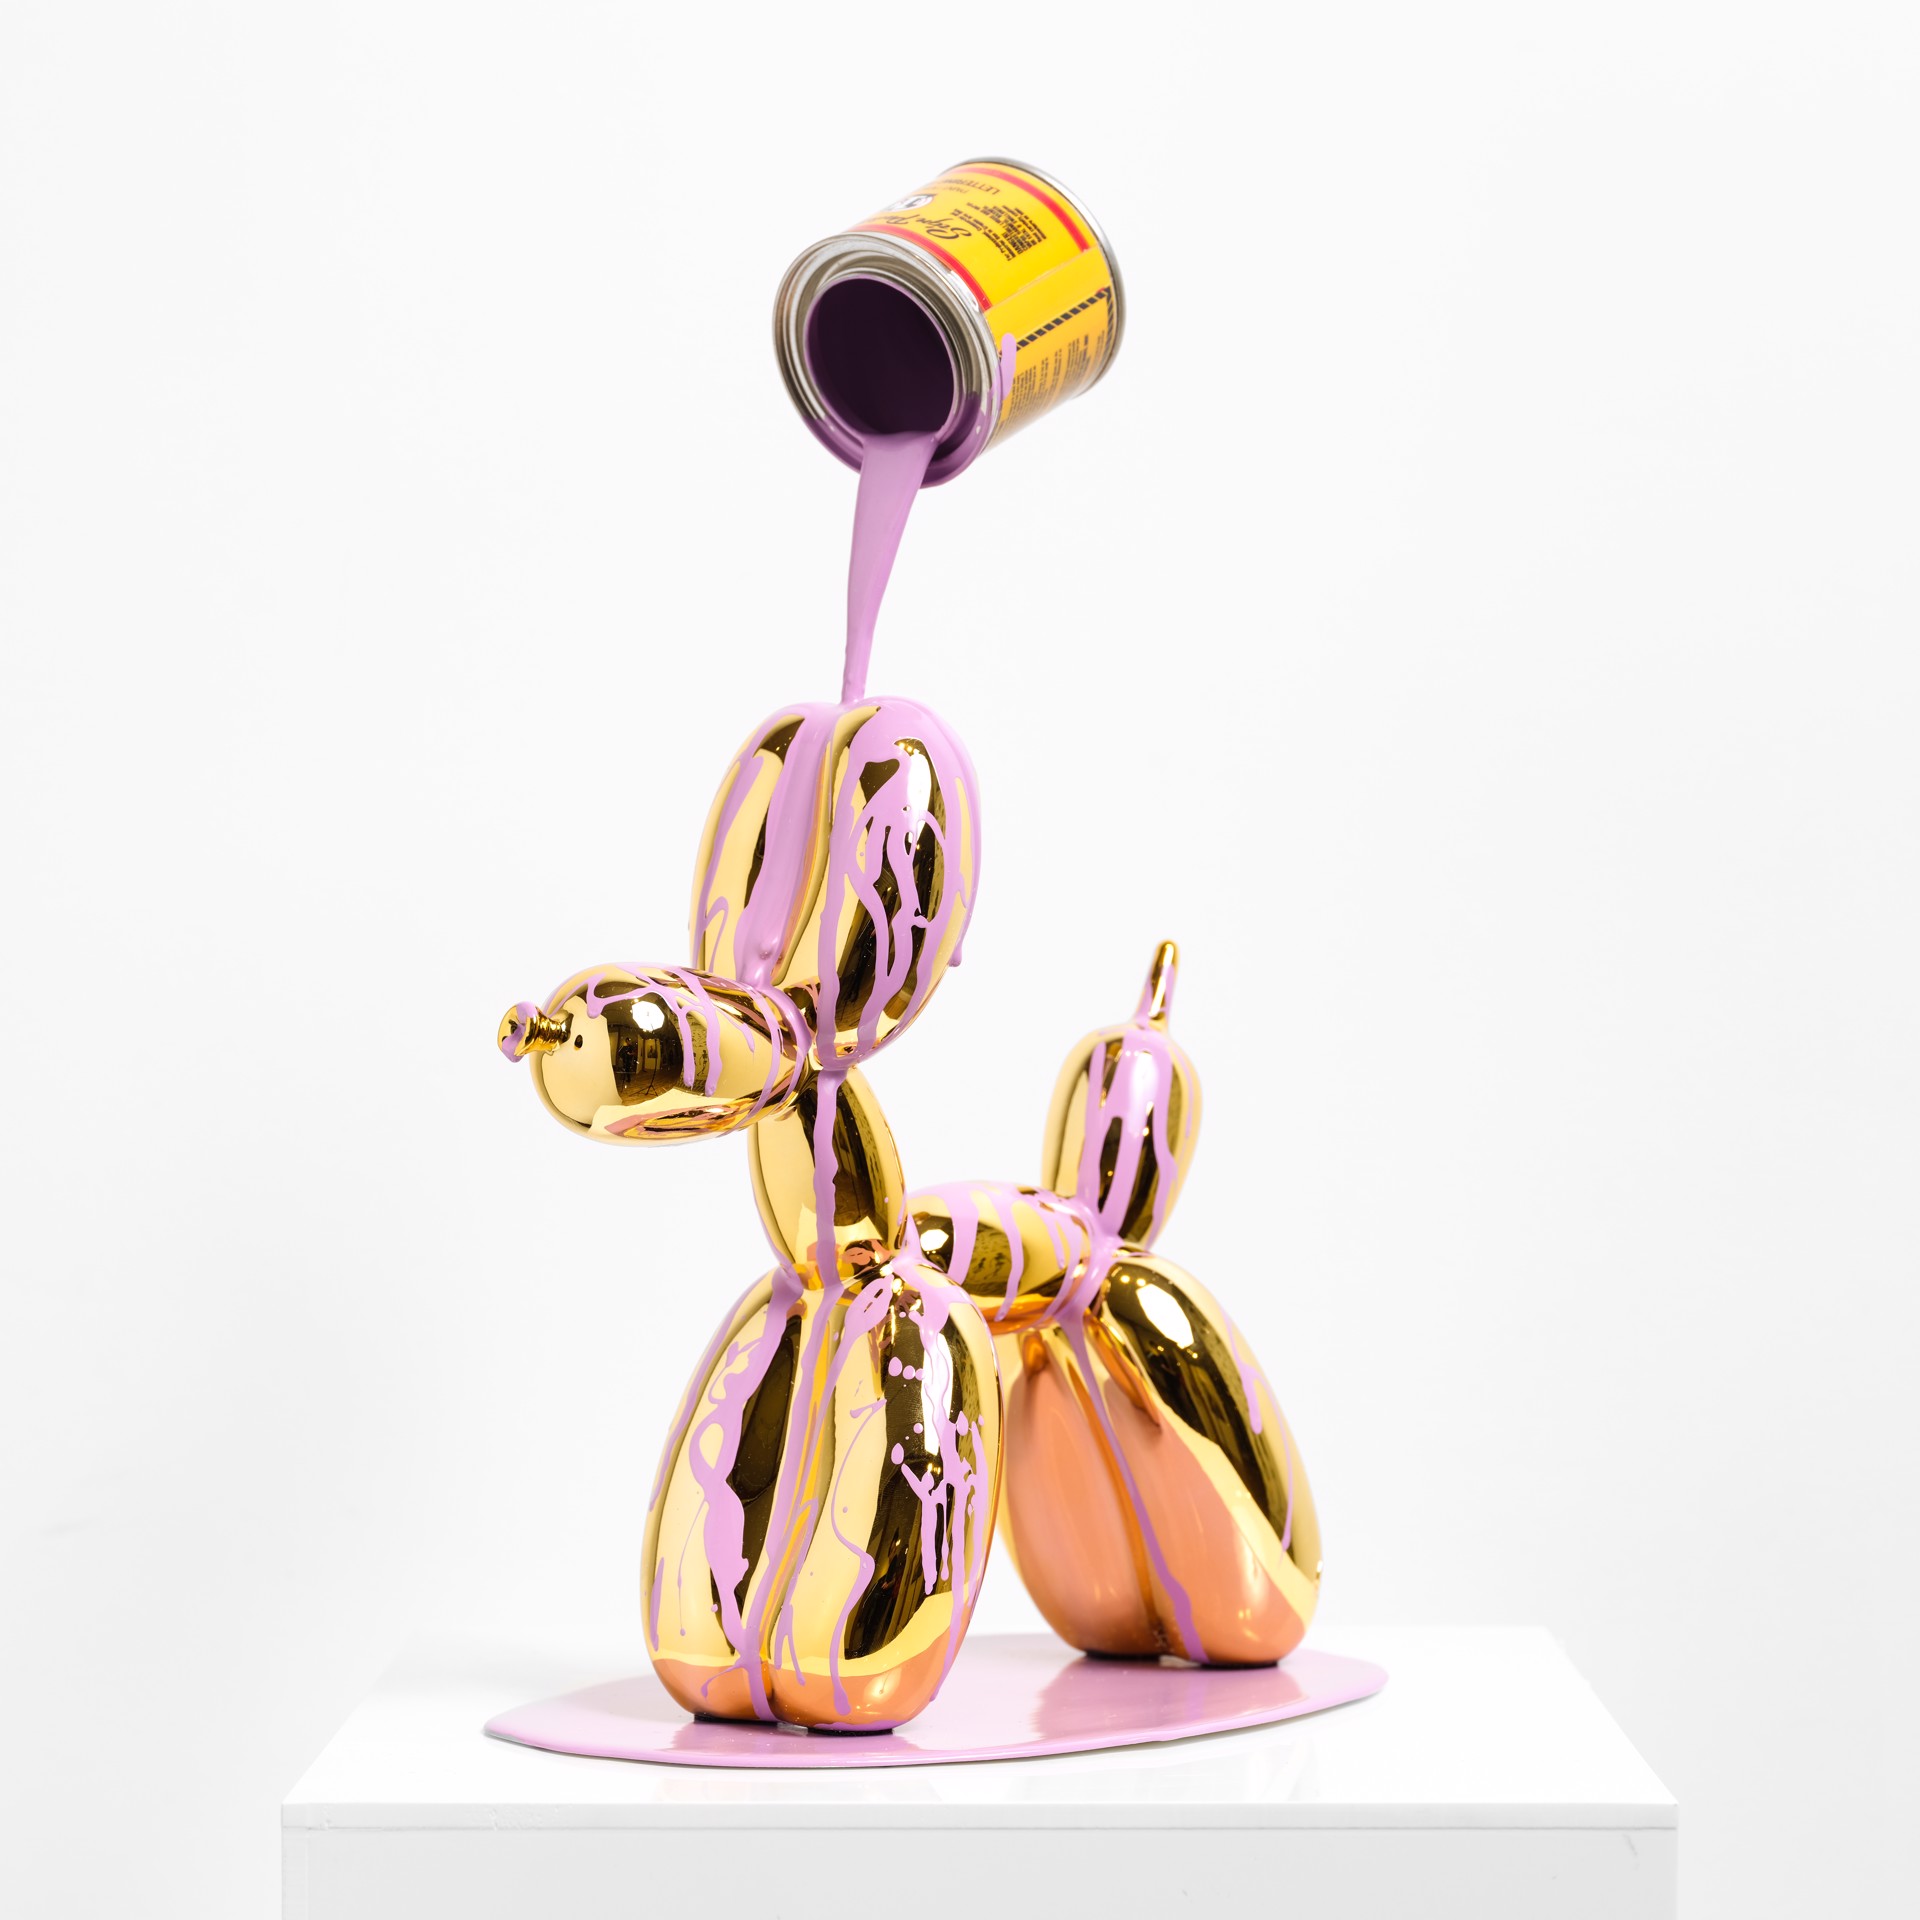 Happy accident - Balloon dog - Gold and Lavender by Joe Suzuki